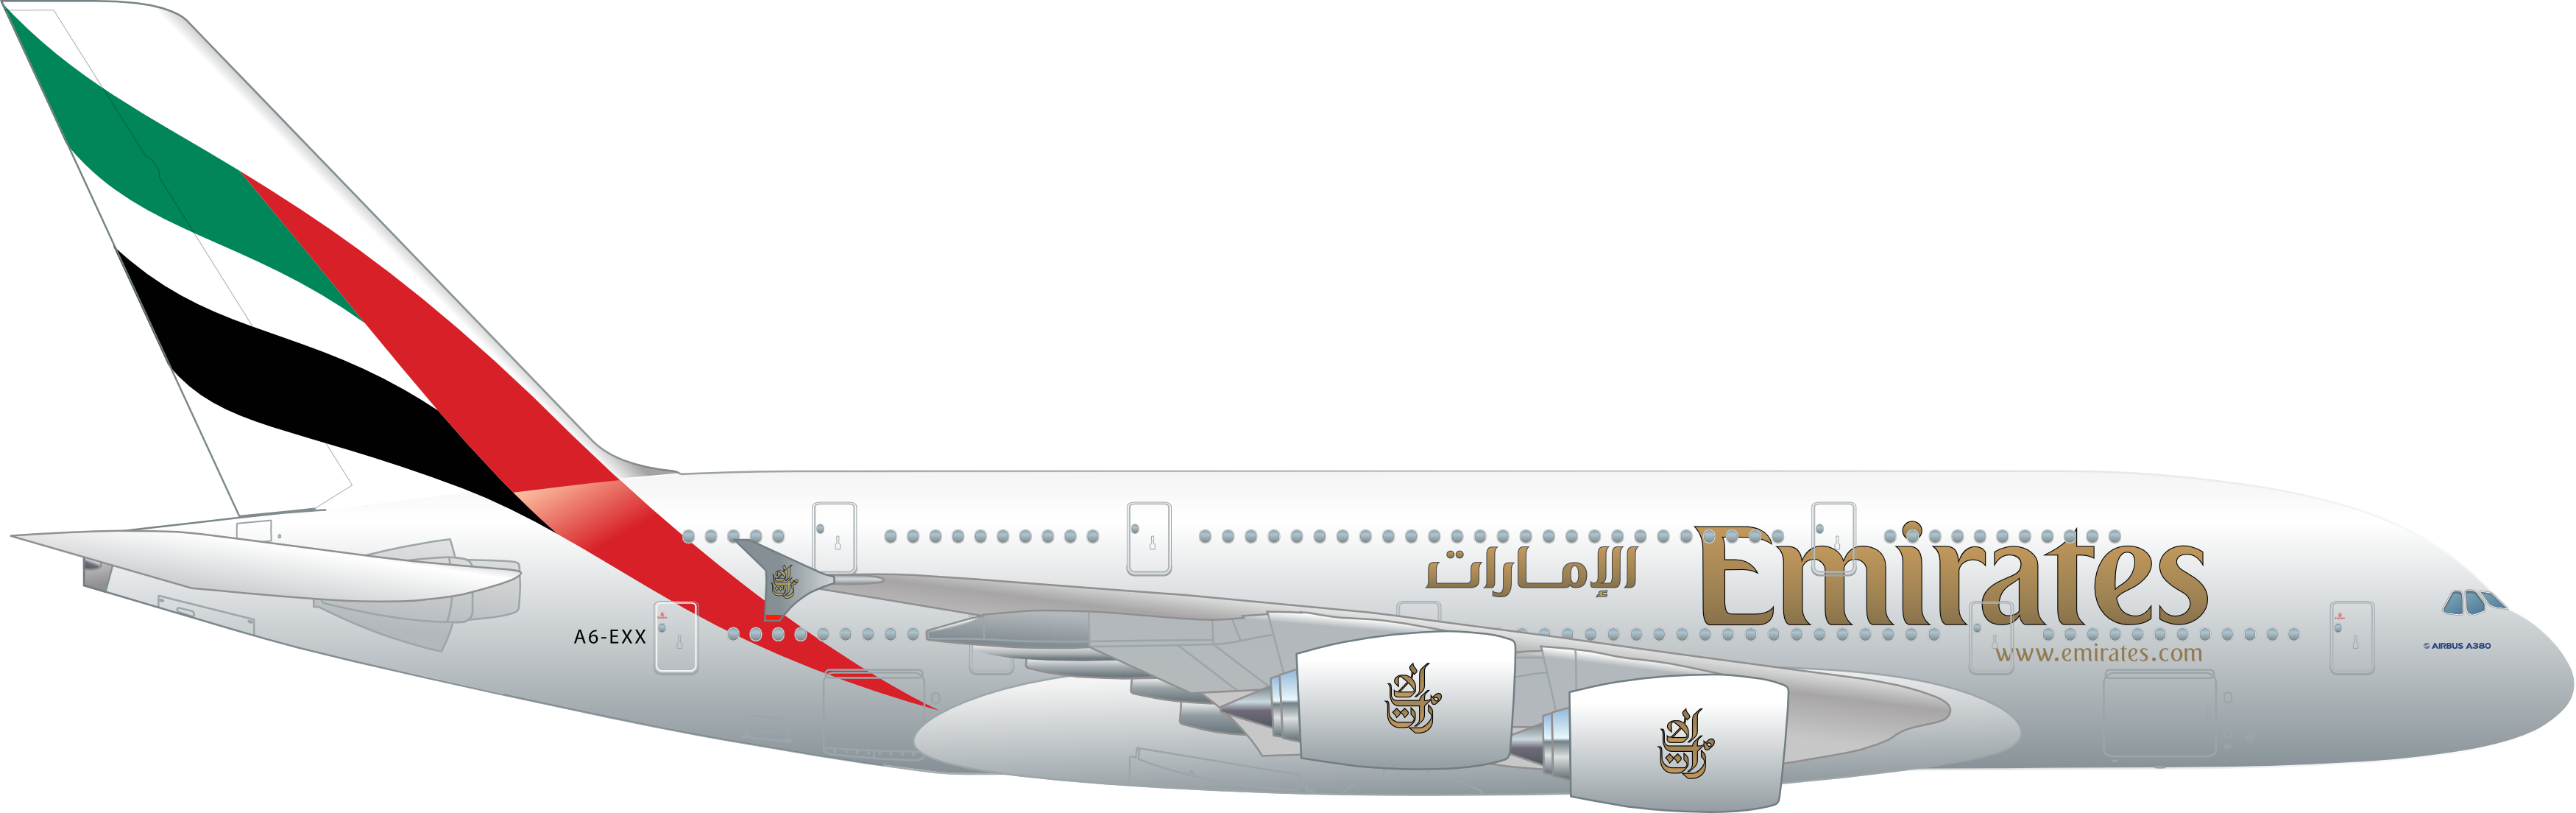 Emirates began flying in 1985